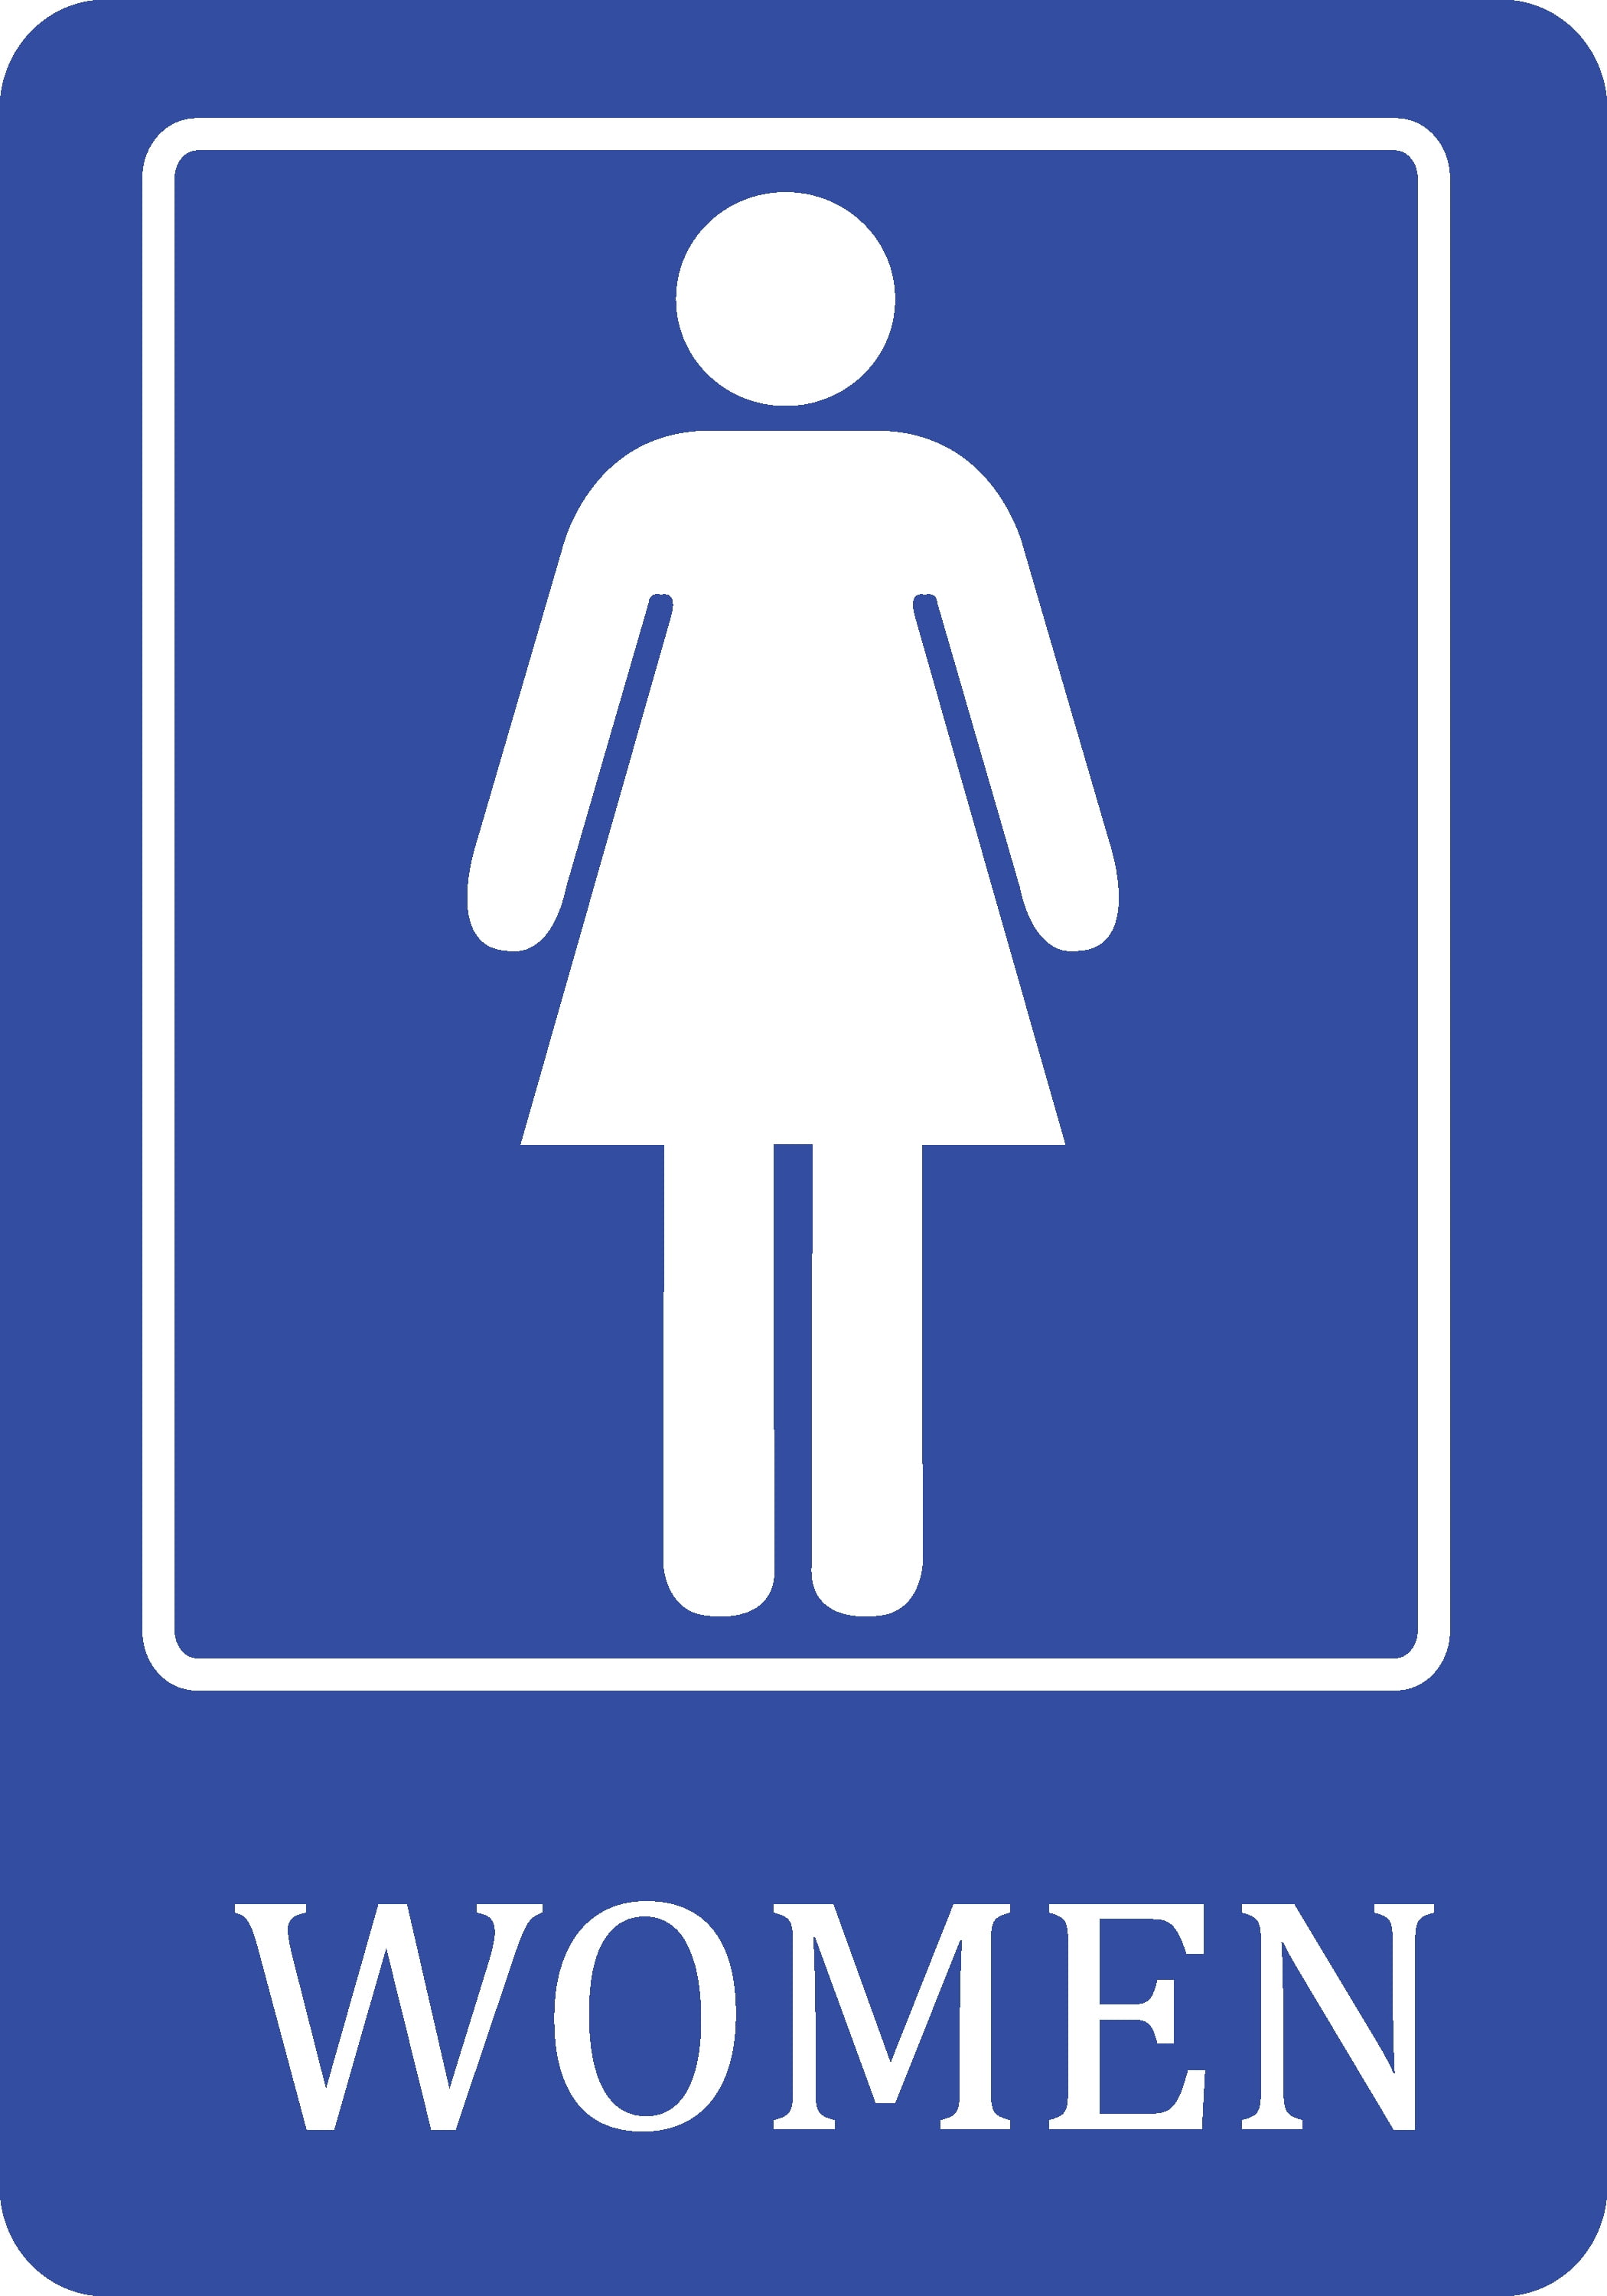 Women Bathroom Blue Sign - Large Public Restroom Signs - Aluminum Metal